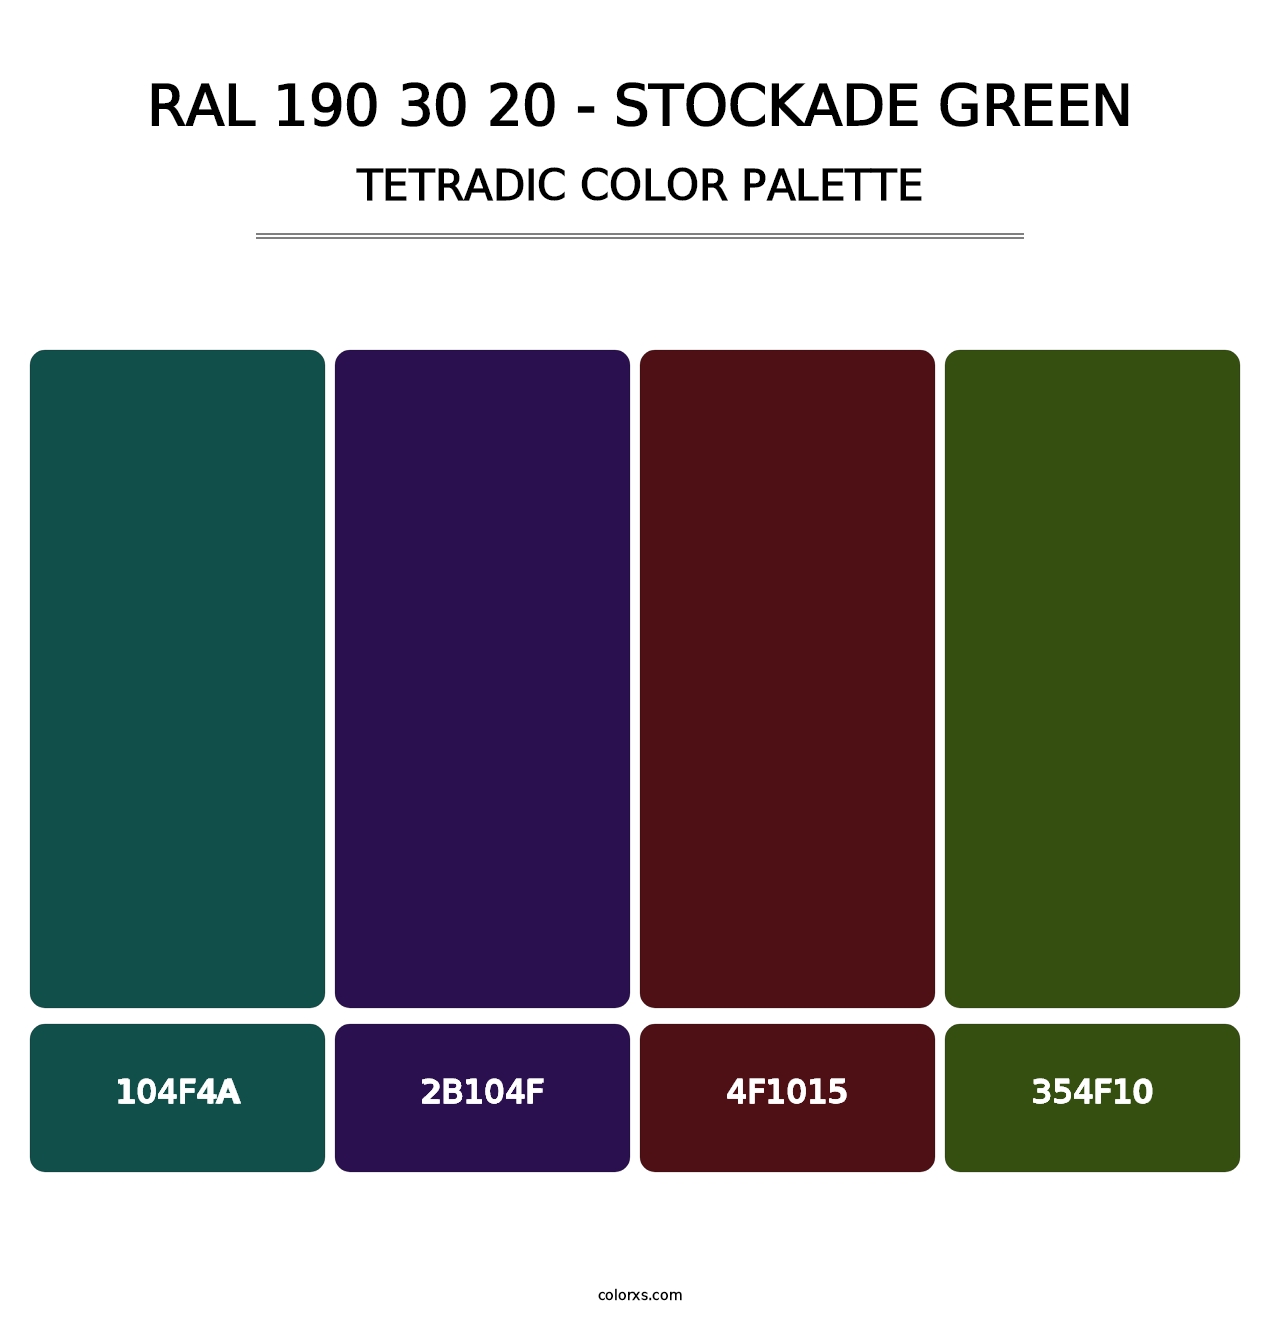 RAL 190 30 20 - Stockade Green - Tetradic Color Palette